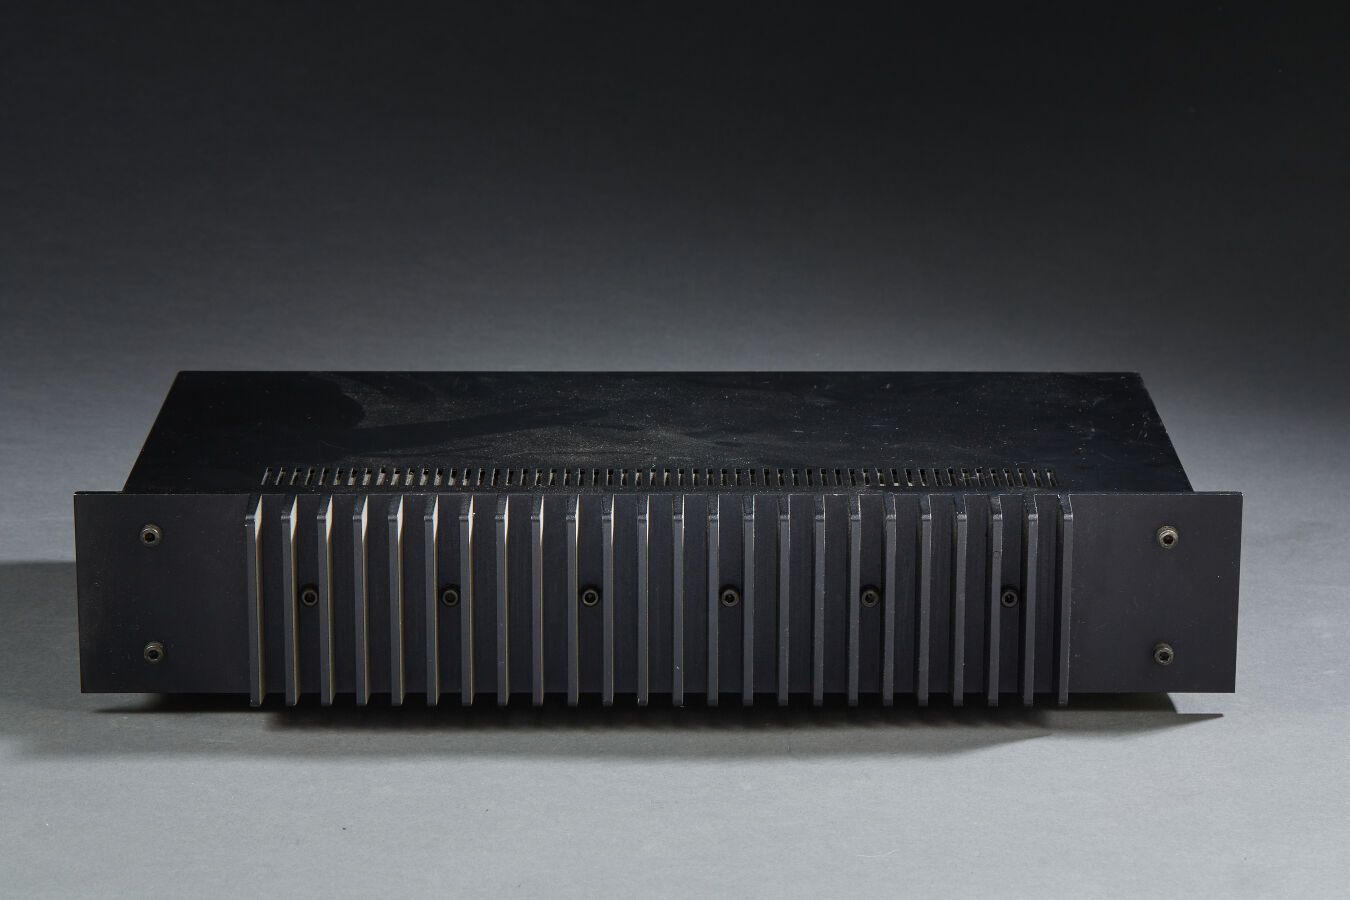 Null 中石420。立体声功率放大器50w/通道（1977-79）。

高度：7厘米 - 宽度：40厘米 - 深度：19厘米 - 重量：7公斤